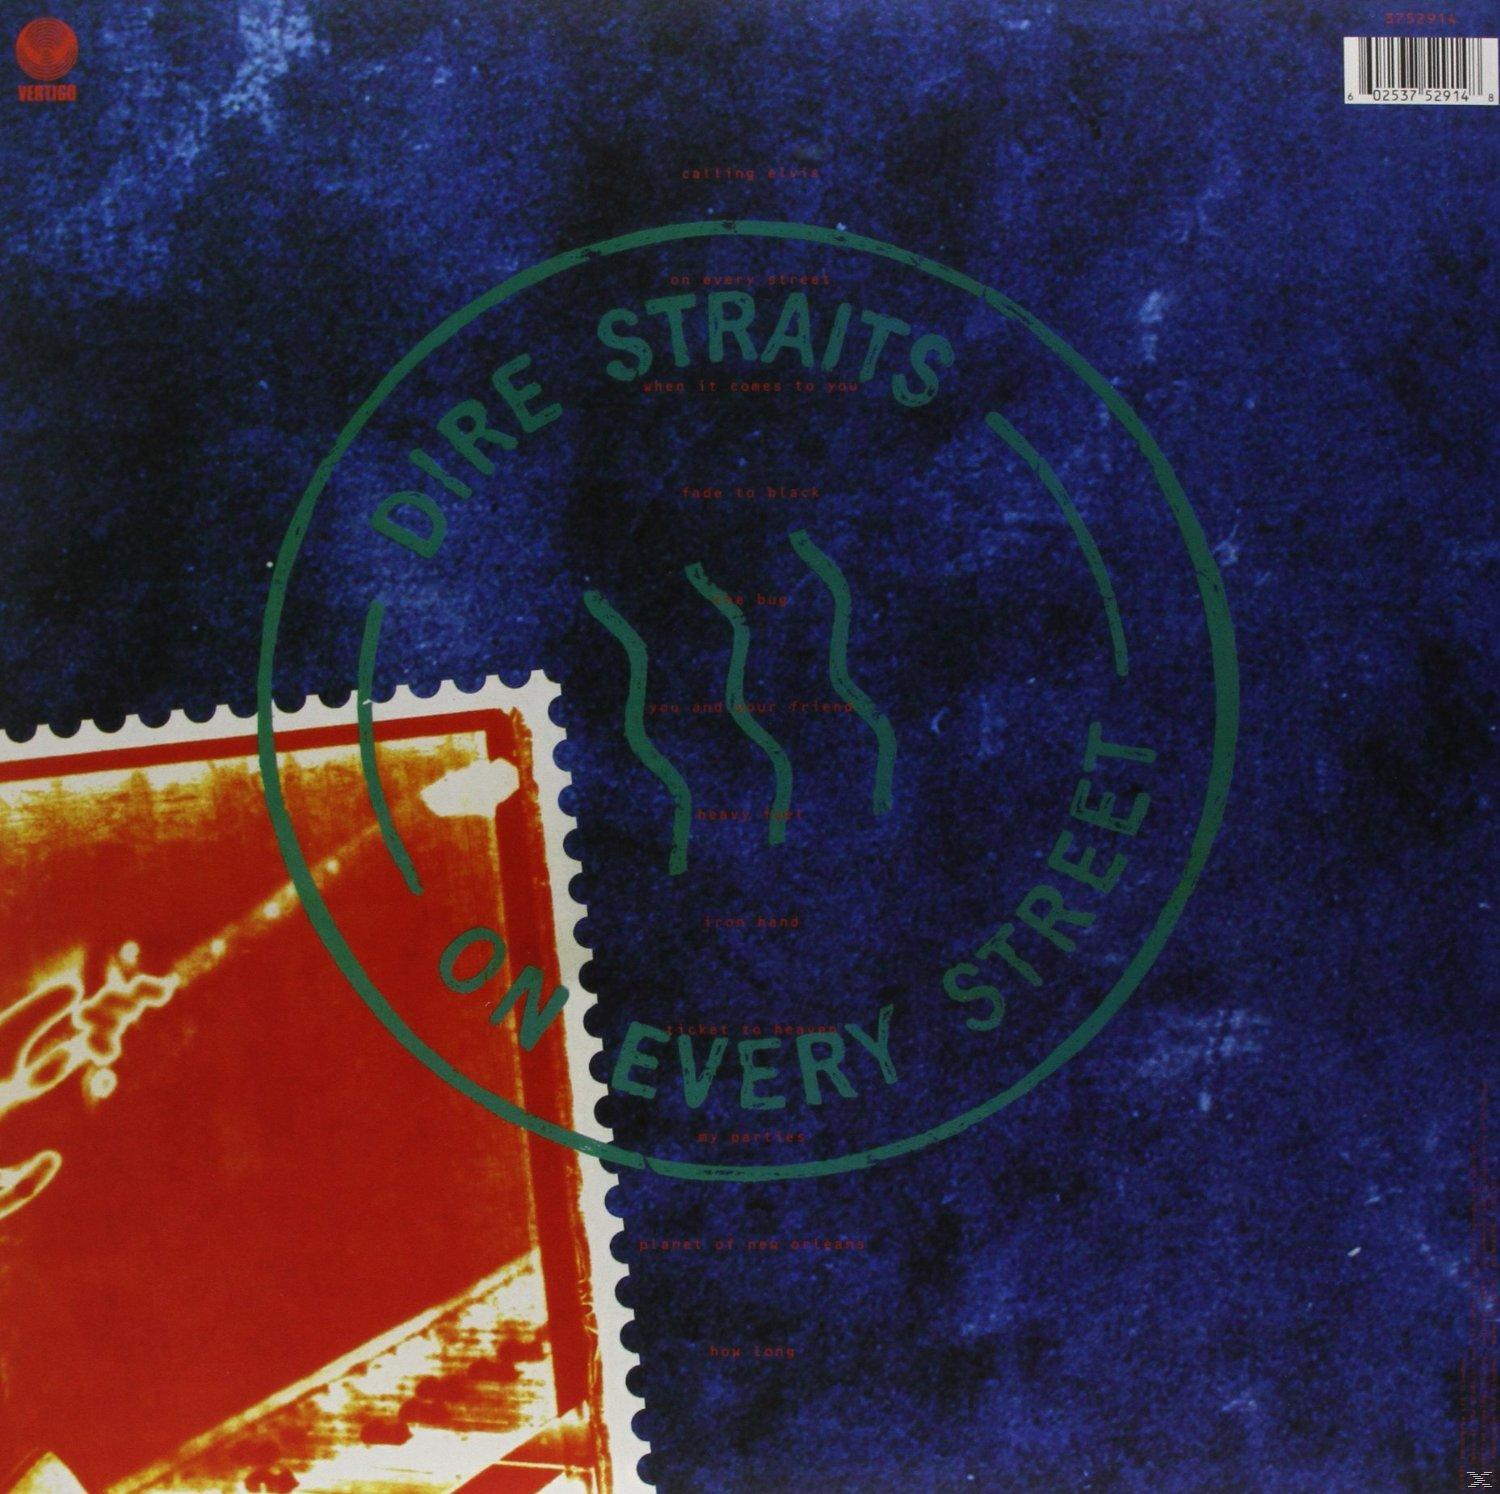 Dire Straits - On Street (Vinyl) Every (2-Lp) 